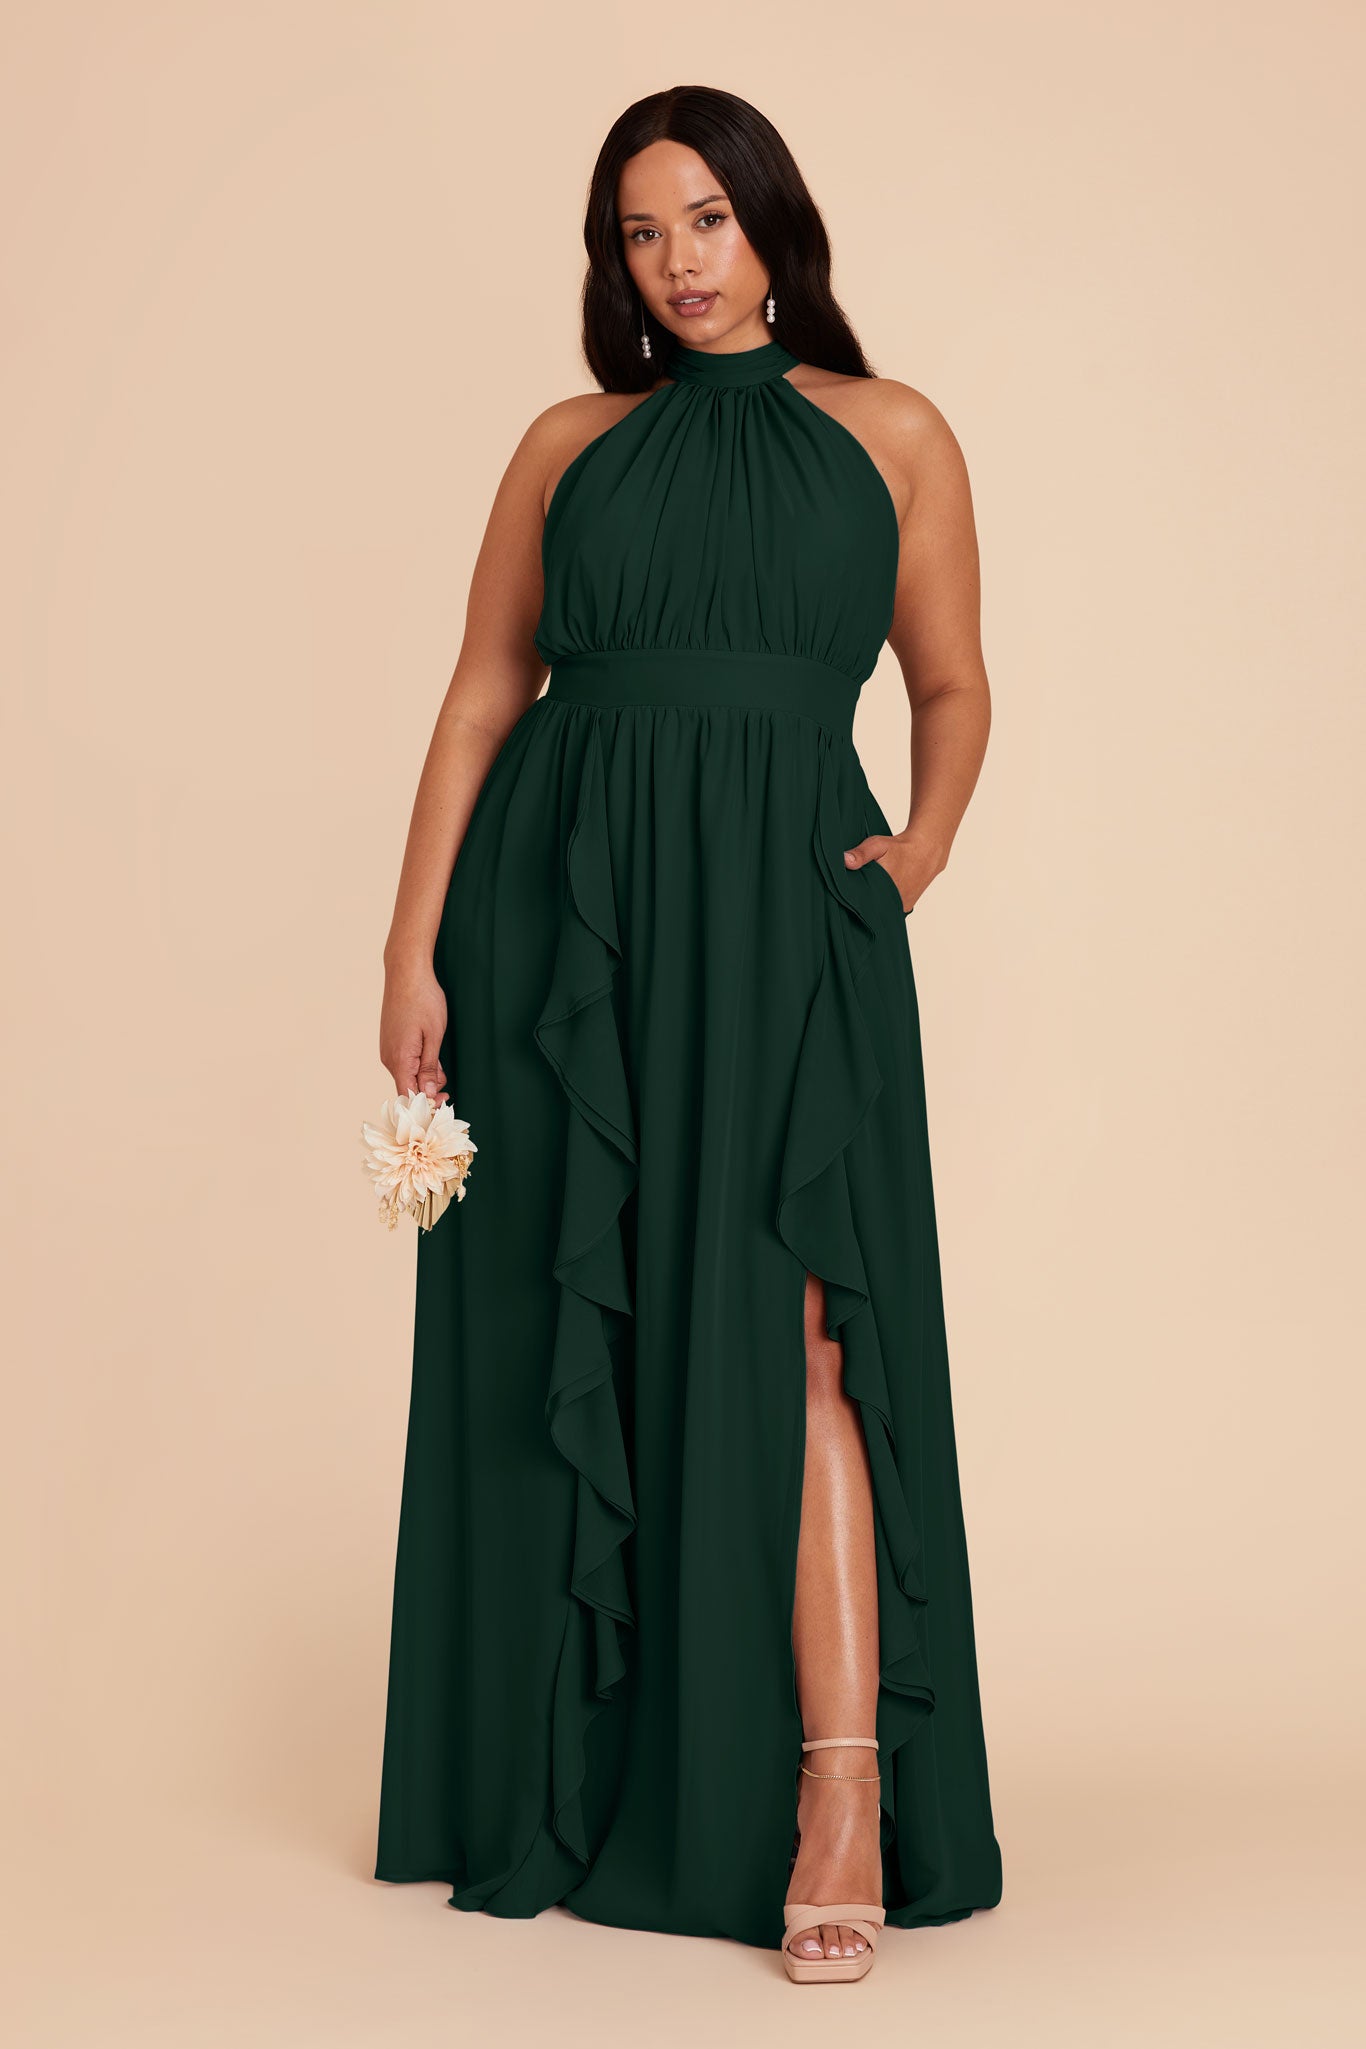 Emerald Joyce Chiffon Dress by Birdy Grey